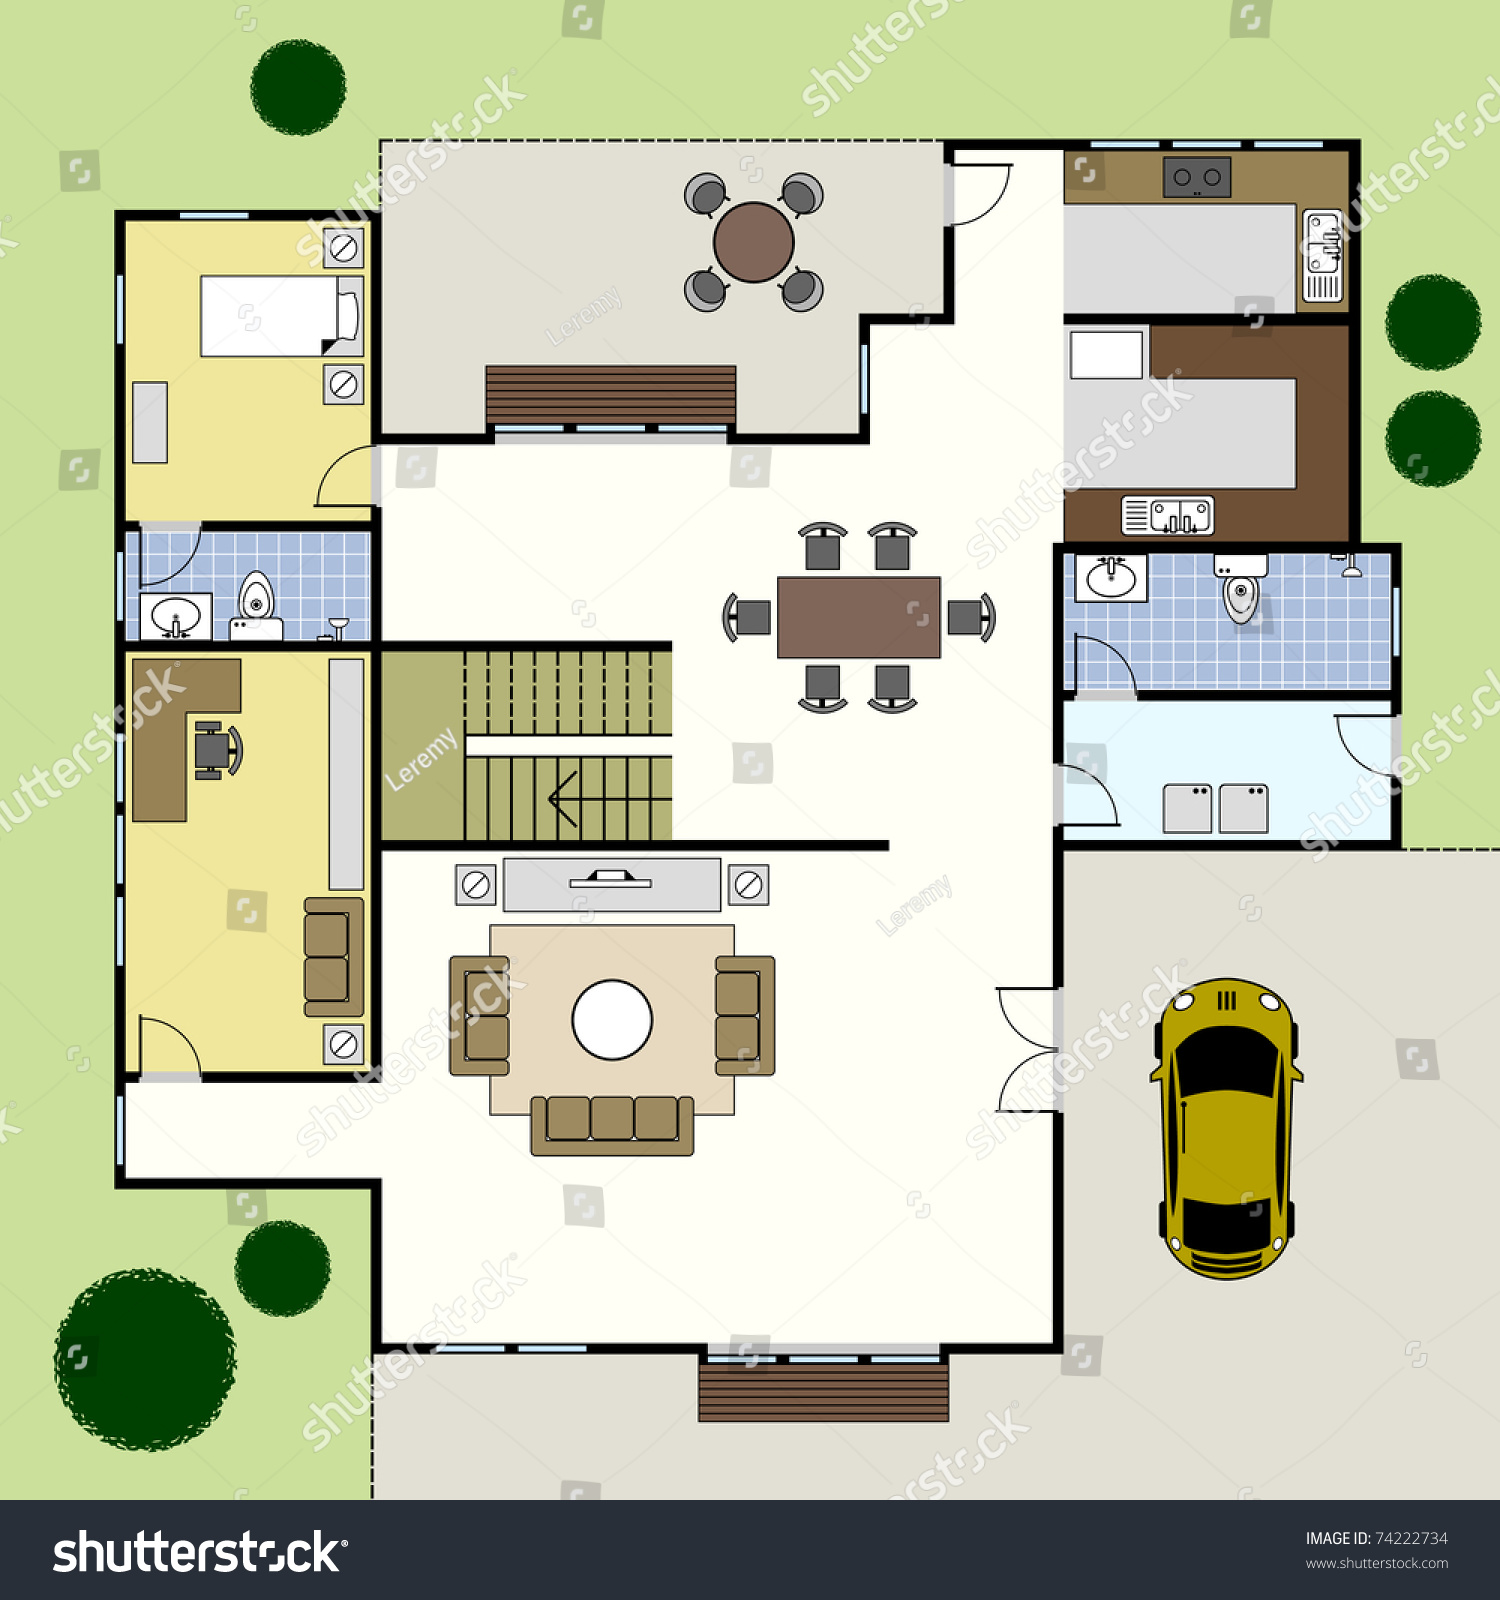 Ground Floor Plan Floorplan House Home Stock Vector Royalty Free